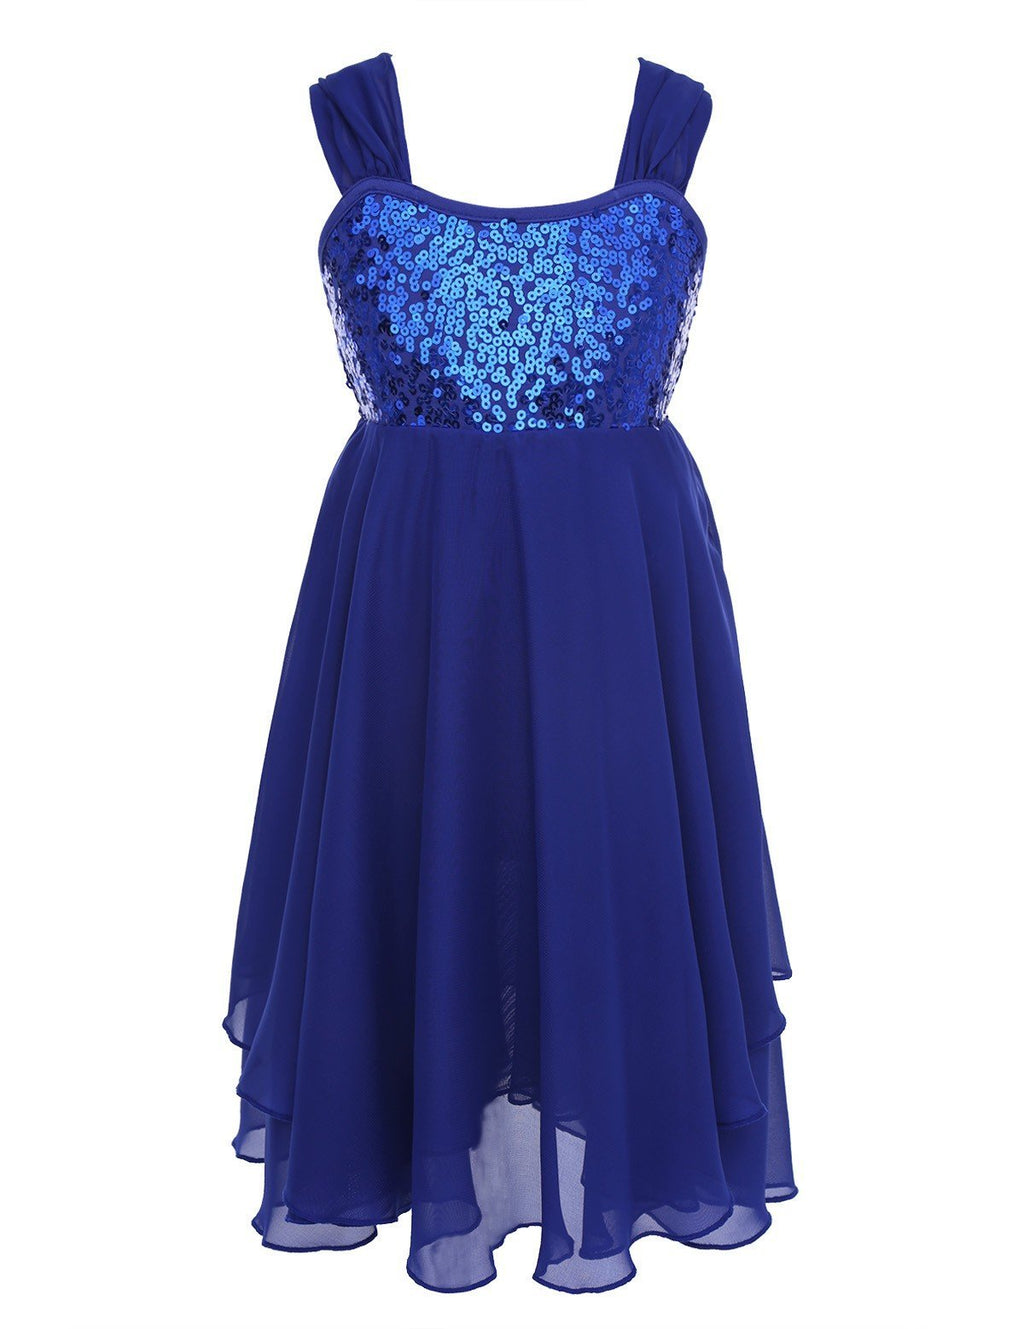 [AUSTRALIA] - YiZYiF Girl's Kids Chiffon Skirted Leotard Dress Sequined Ballet Dance Costumes Blue 8 